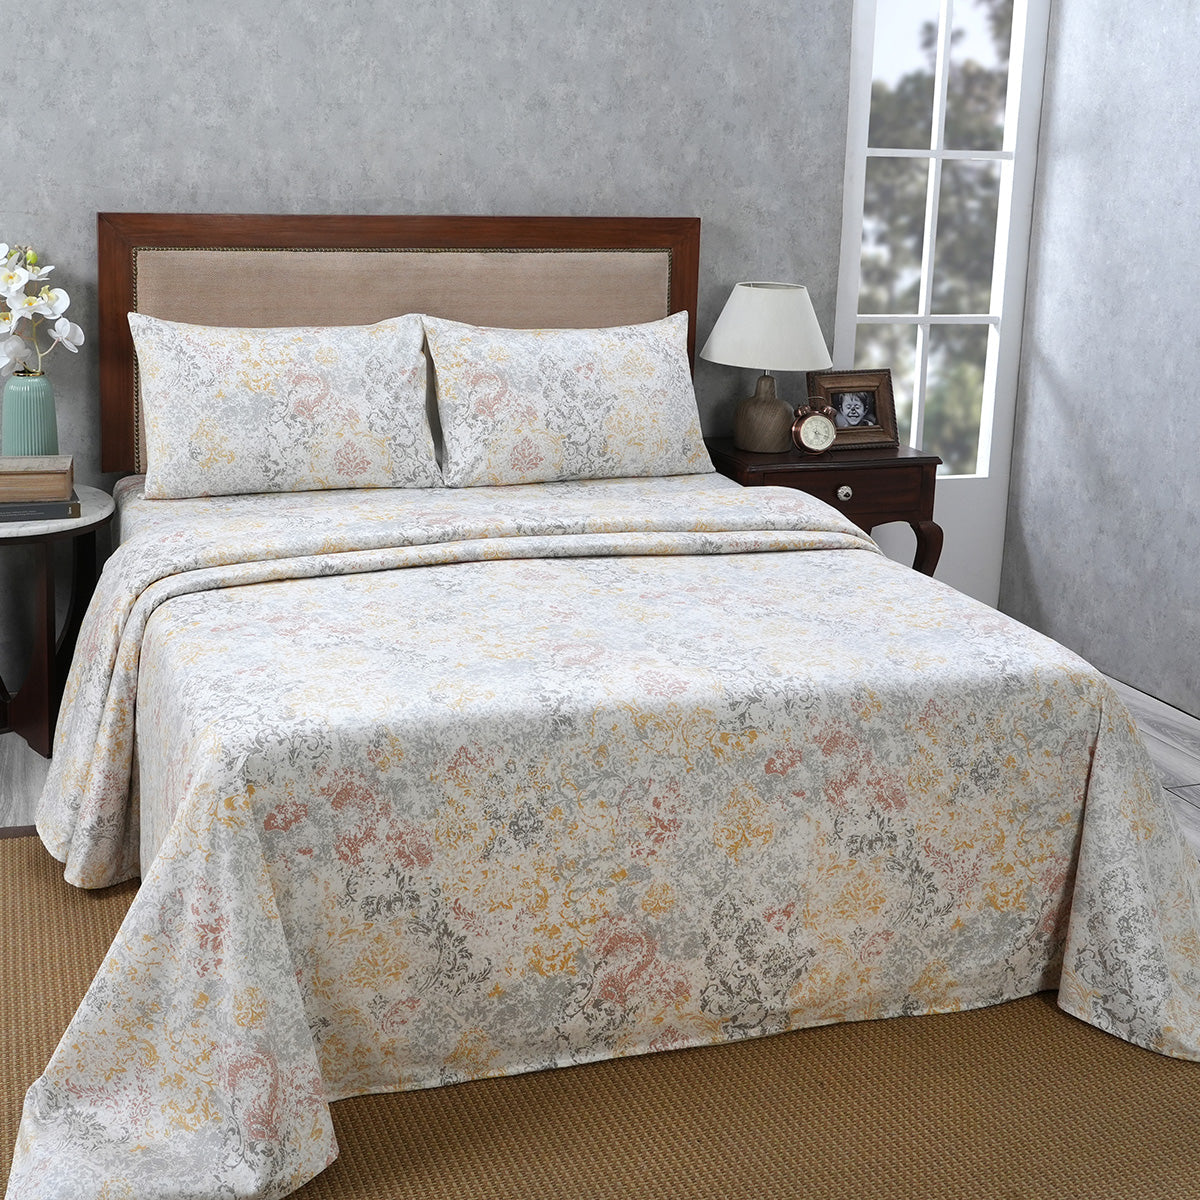 PBS Renaissance Medley 100% Cotton Print Bed Sheet With Pillow Case